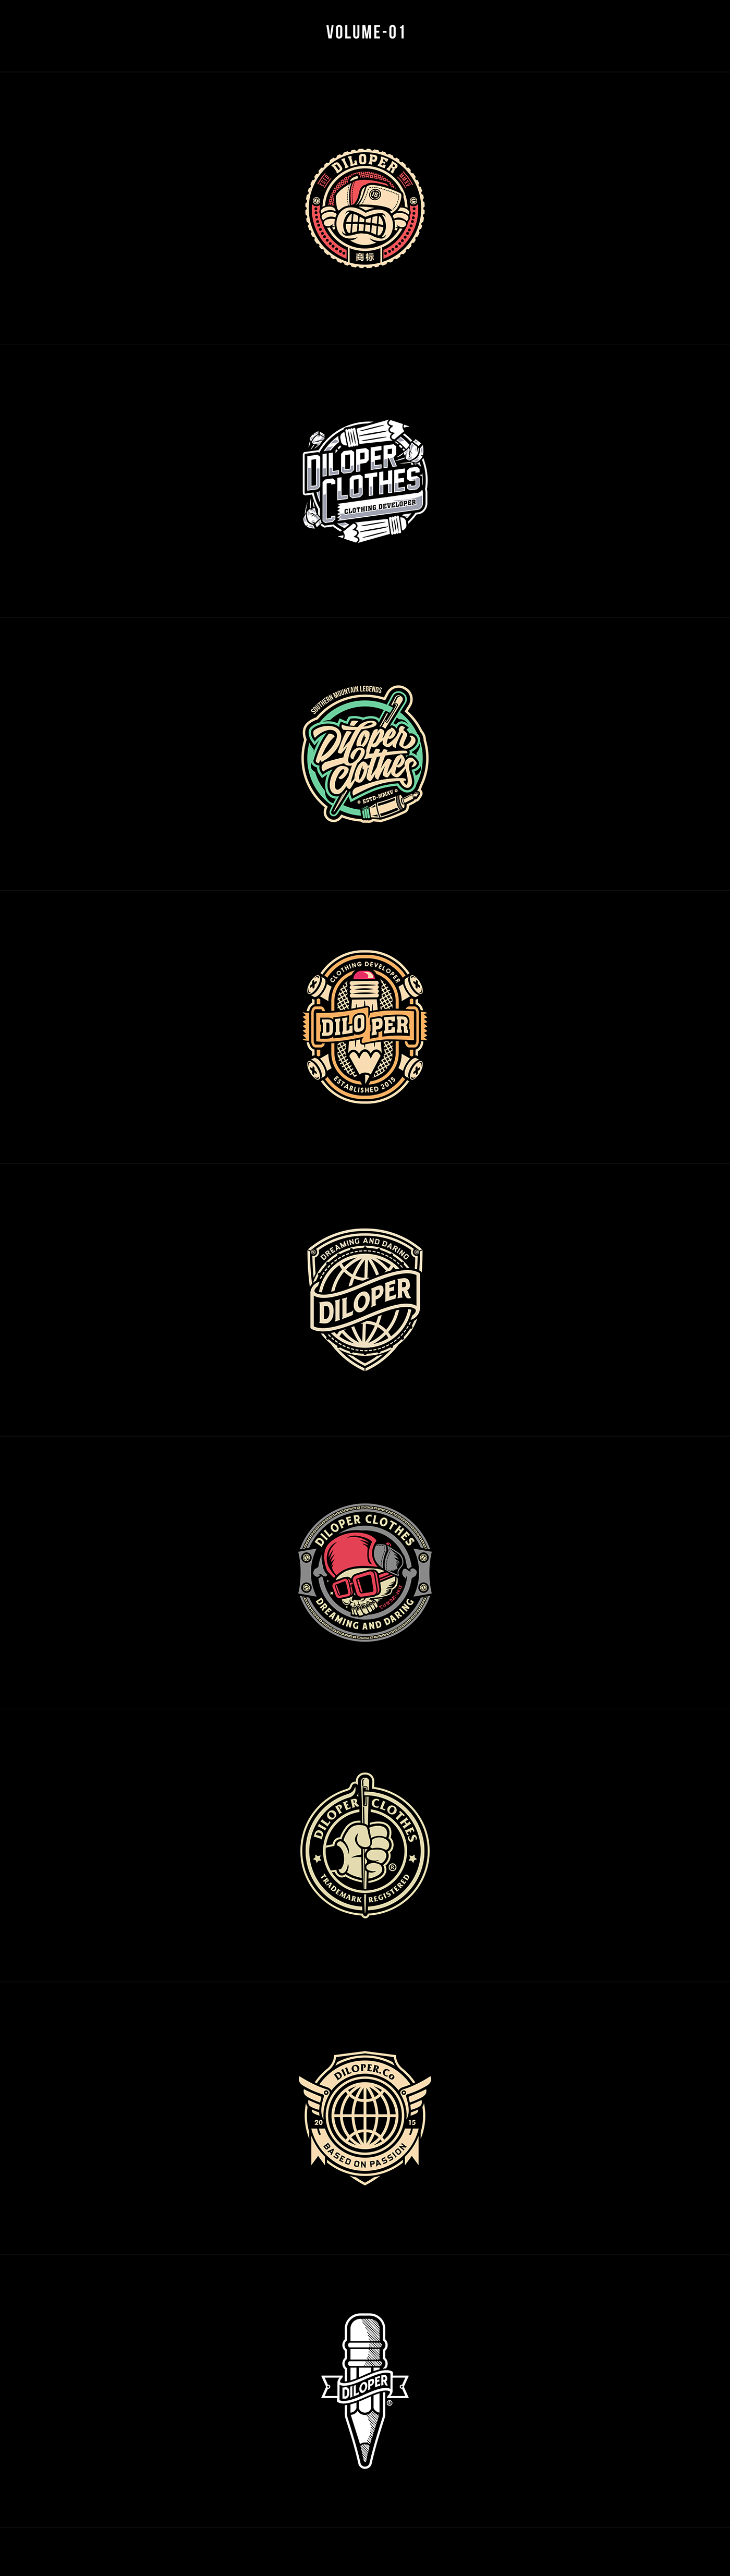 t-shirt Clothing apparel vintage Badges Retro Logotype lettering logos Clothing Company